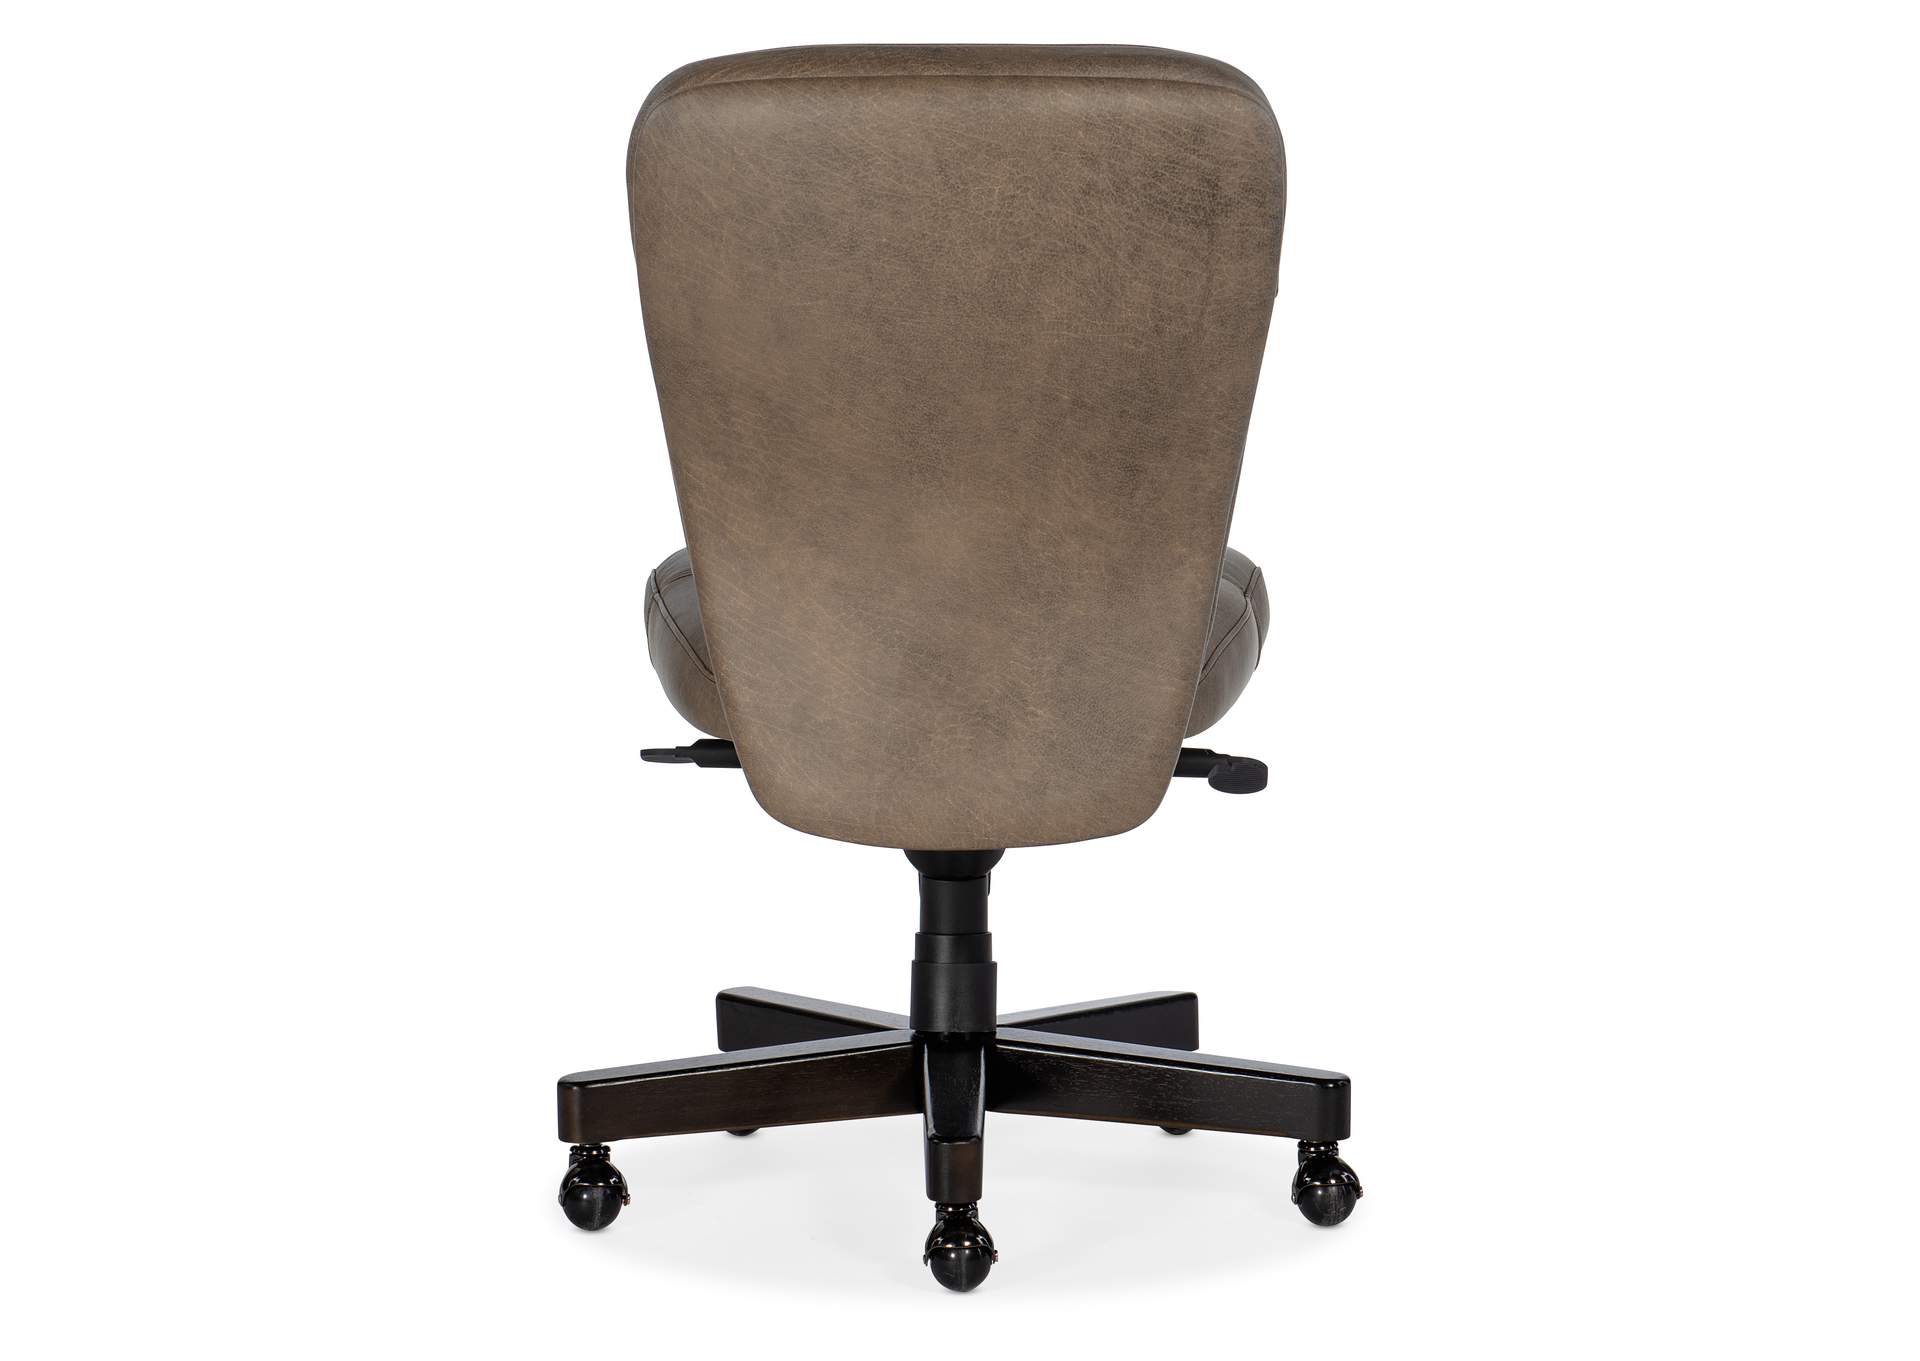 Sasha Executive Swivel Tilt Chair,Hooker Furniture